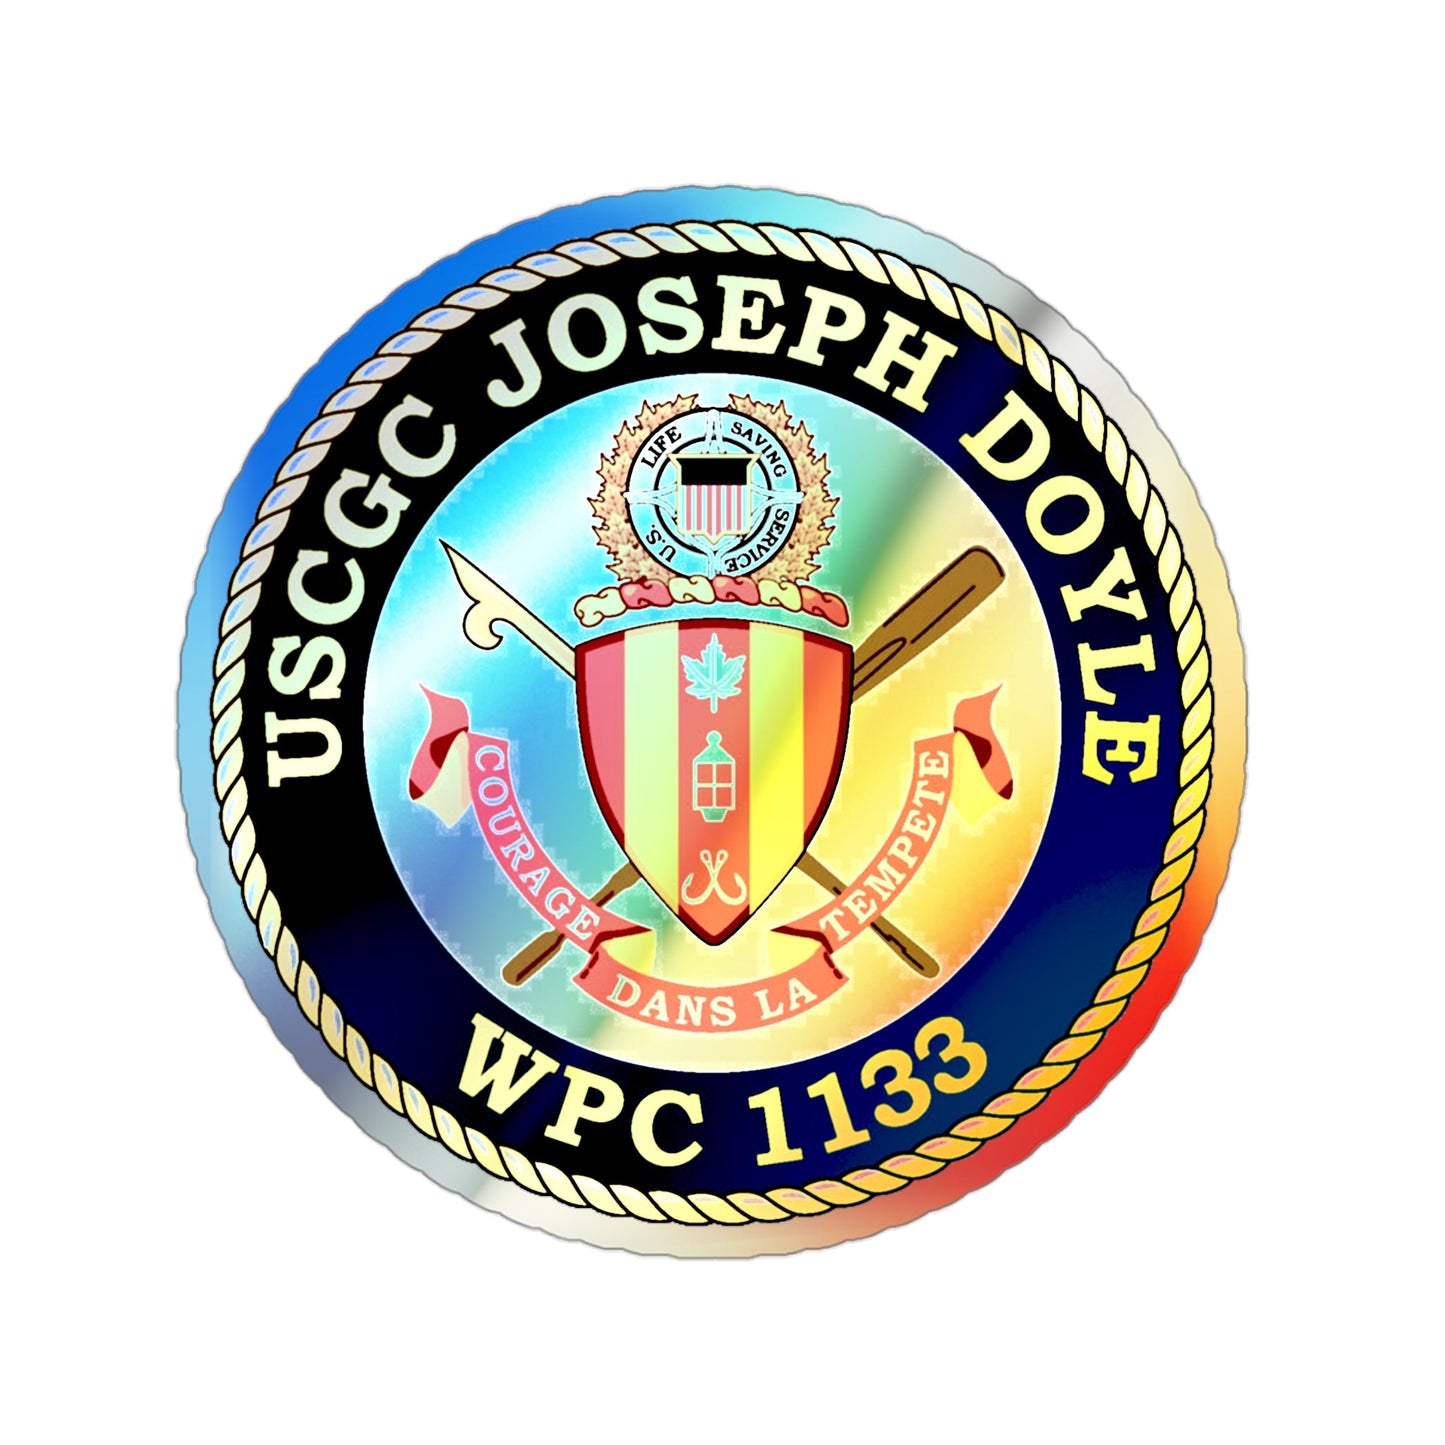 USCG C JOSEPH DOYLE W PC 1133 (U.S. Coast Guard) Holographic STICKER Die-Cut Vinyl Decal-3 Inch-The Sticker Space